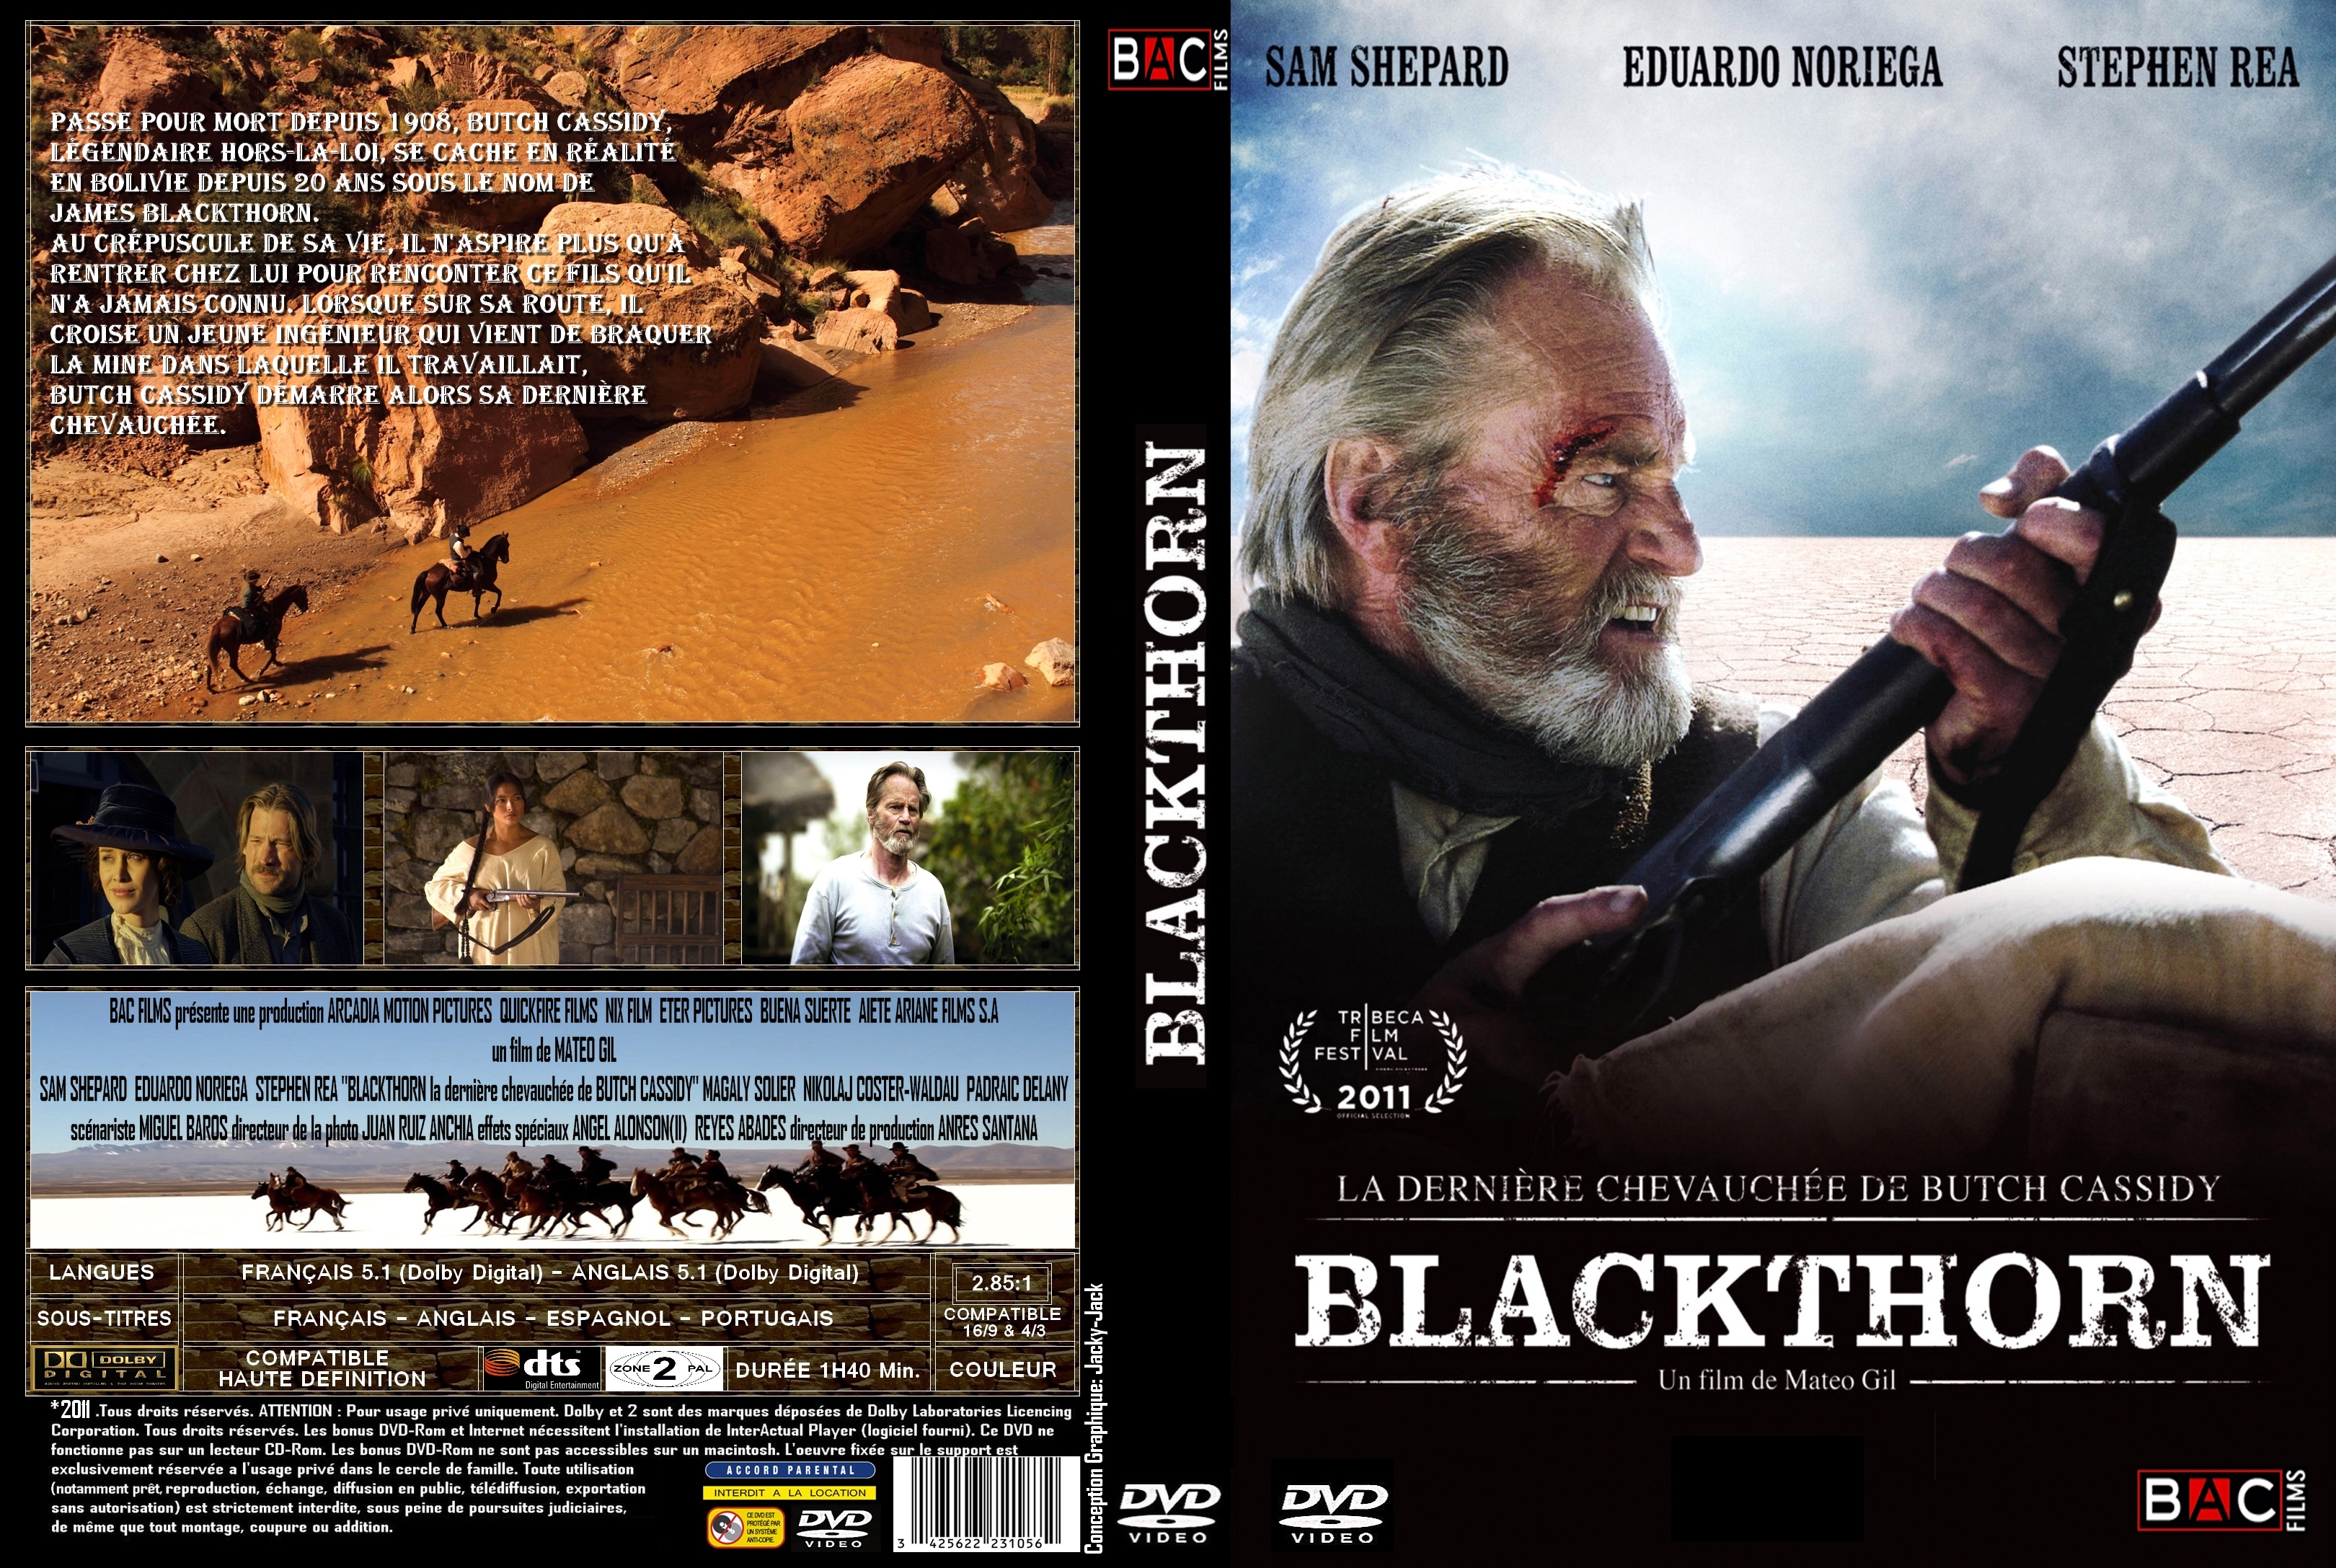 Jaquette DVD Blackthorn custom